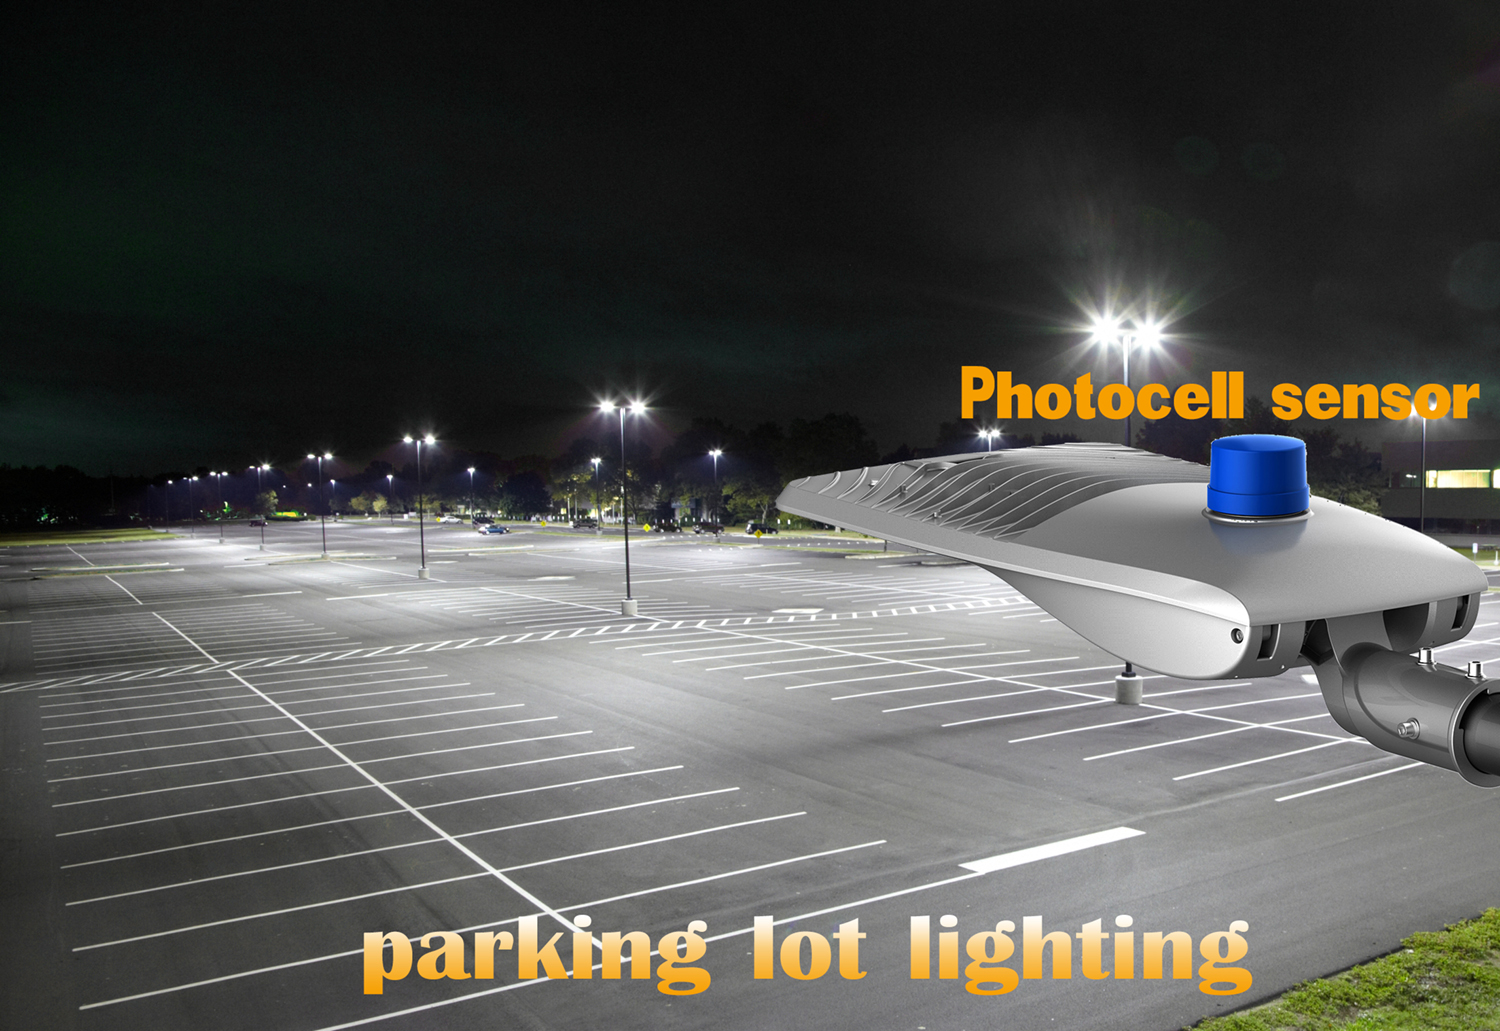 Parking lot light with photocell sensor